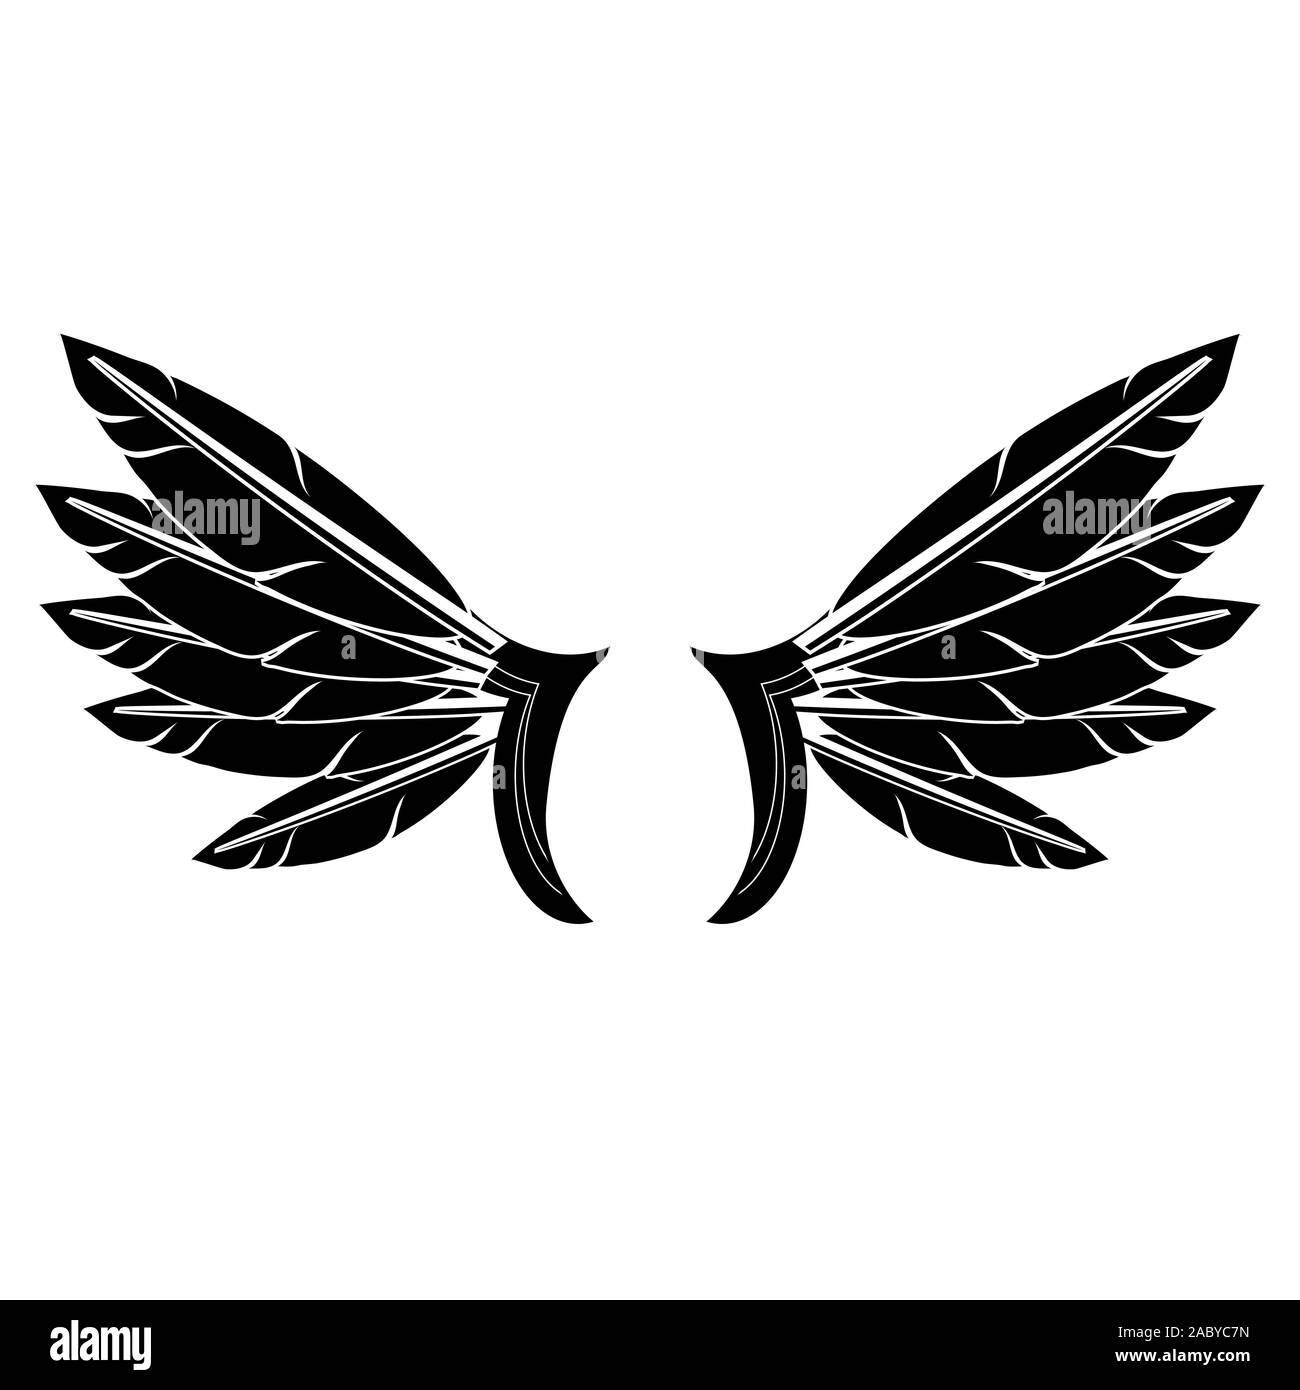 Angel Or Phoenix Wings On White Background Winged Logo Design Part Of Eagle Bird Design Elements For Emblem Sign Brand Mark Stock Photo Alamy